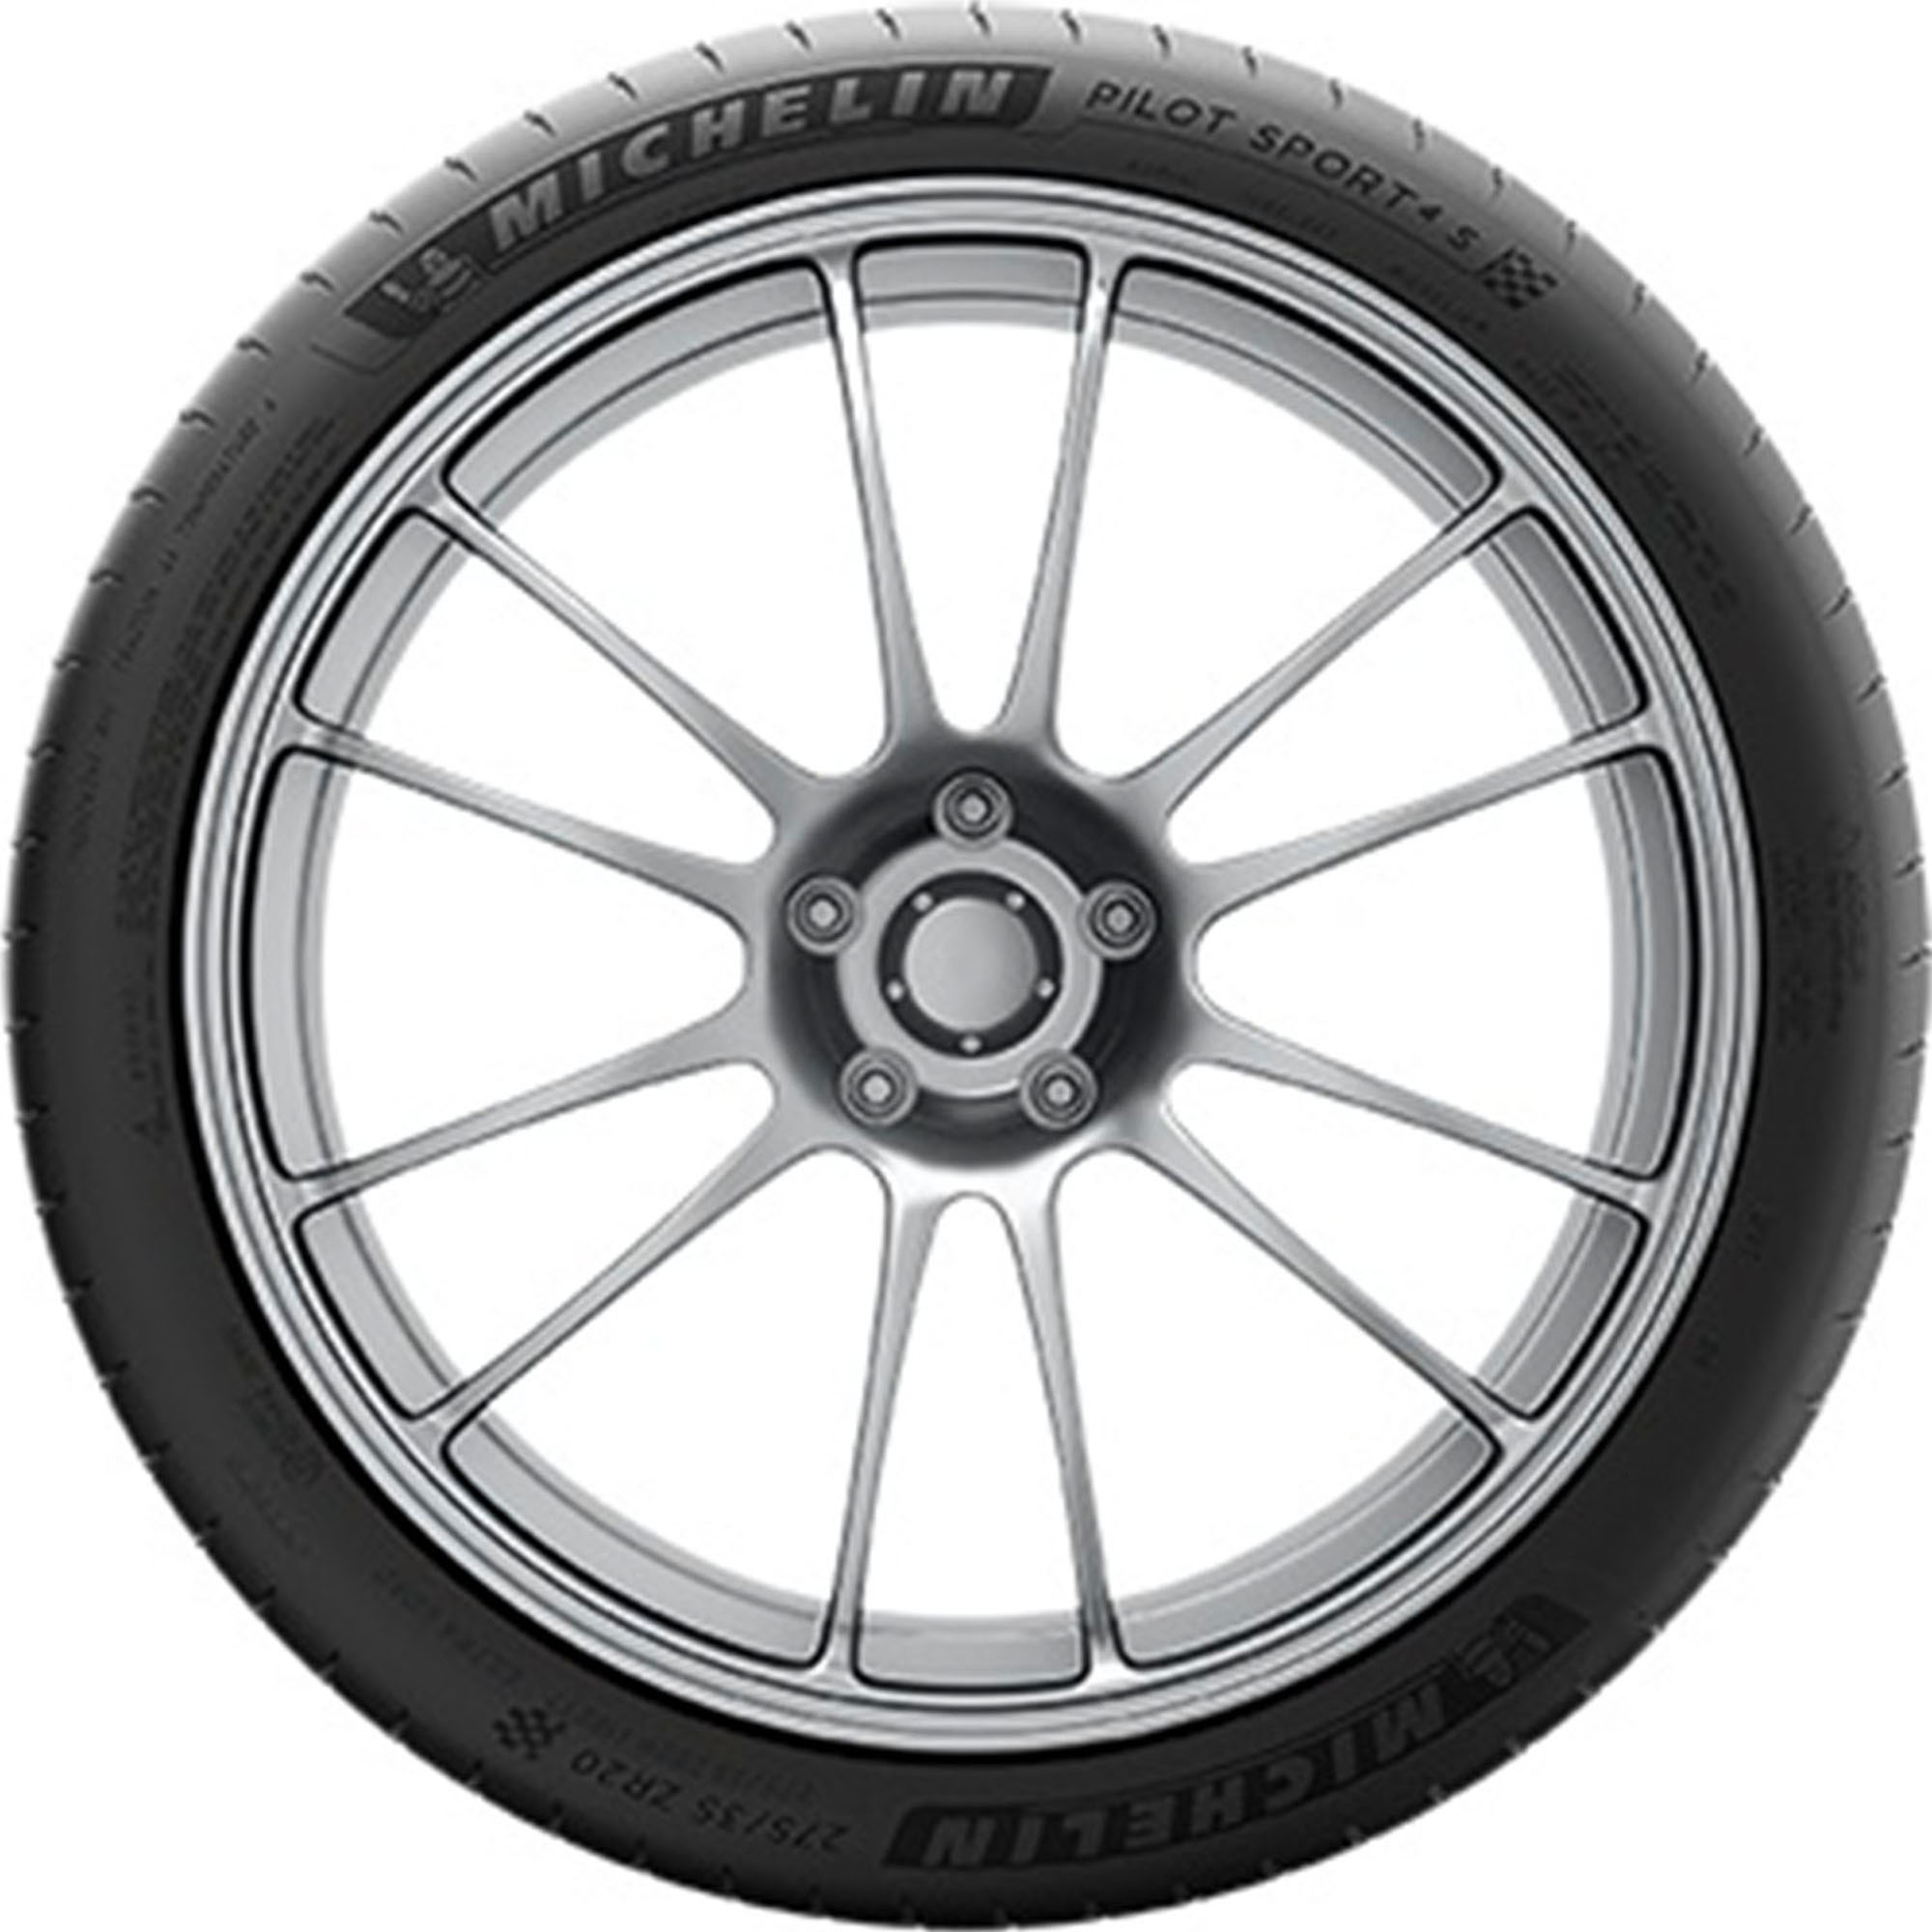 Michelin Pilot Sport 4S Performance 245/45ZR18 (100Y) XL Passenger Tire - image 2 of 4